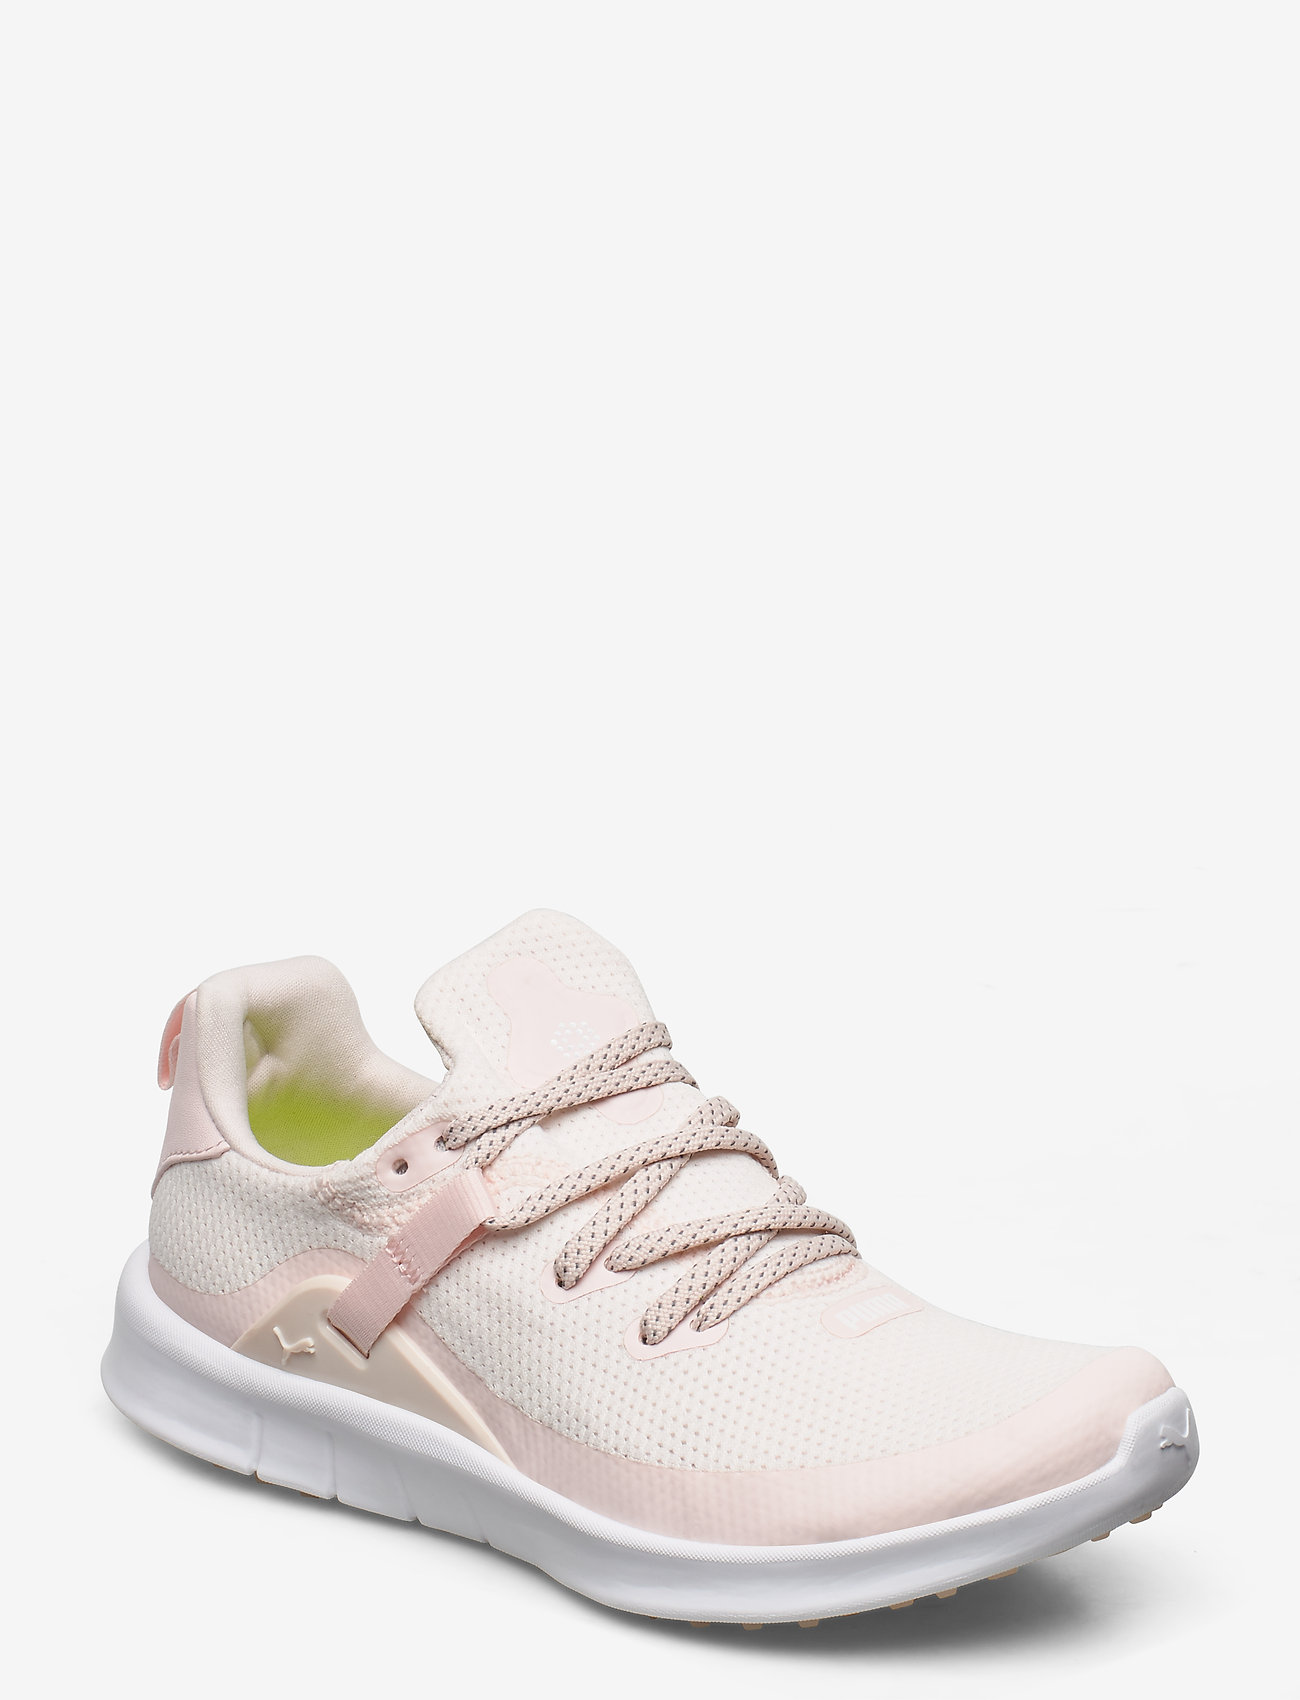 puma white mesh sports shoes